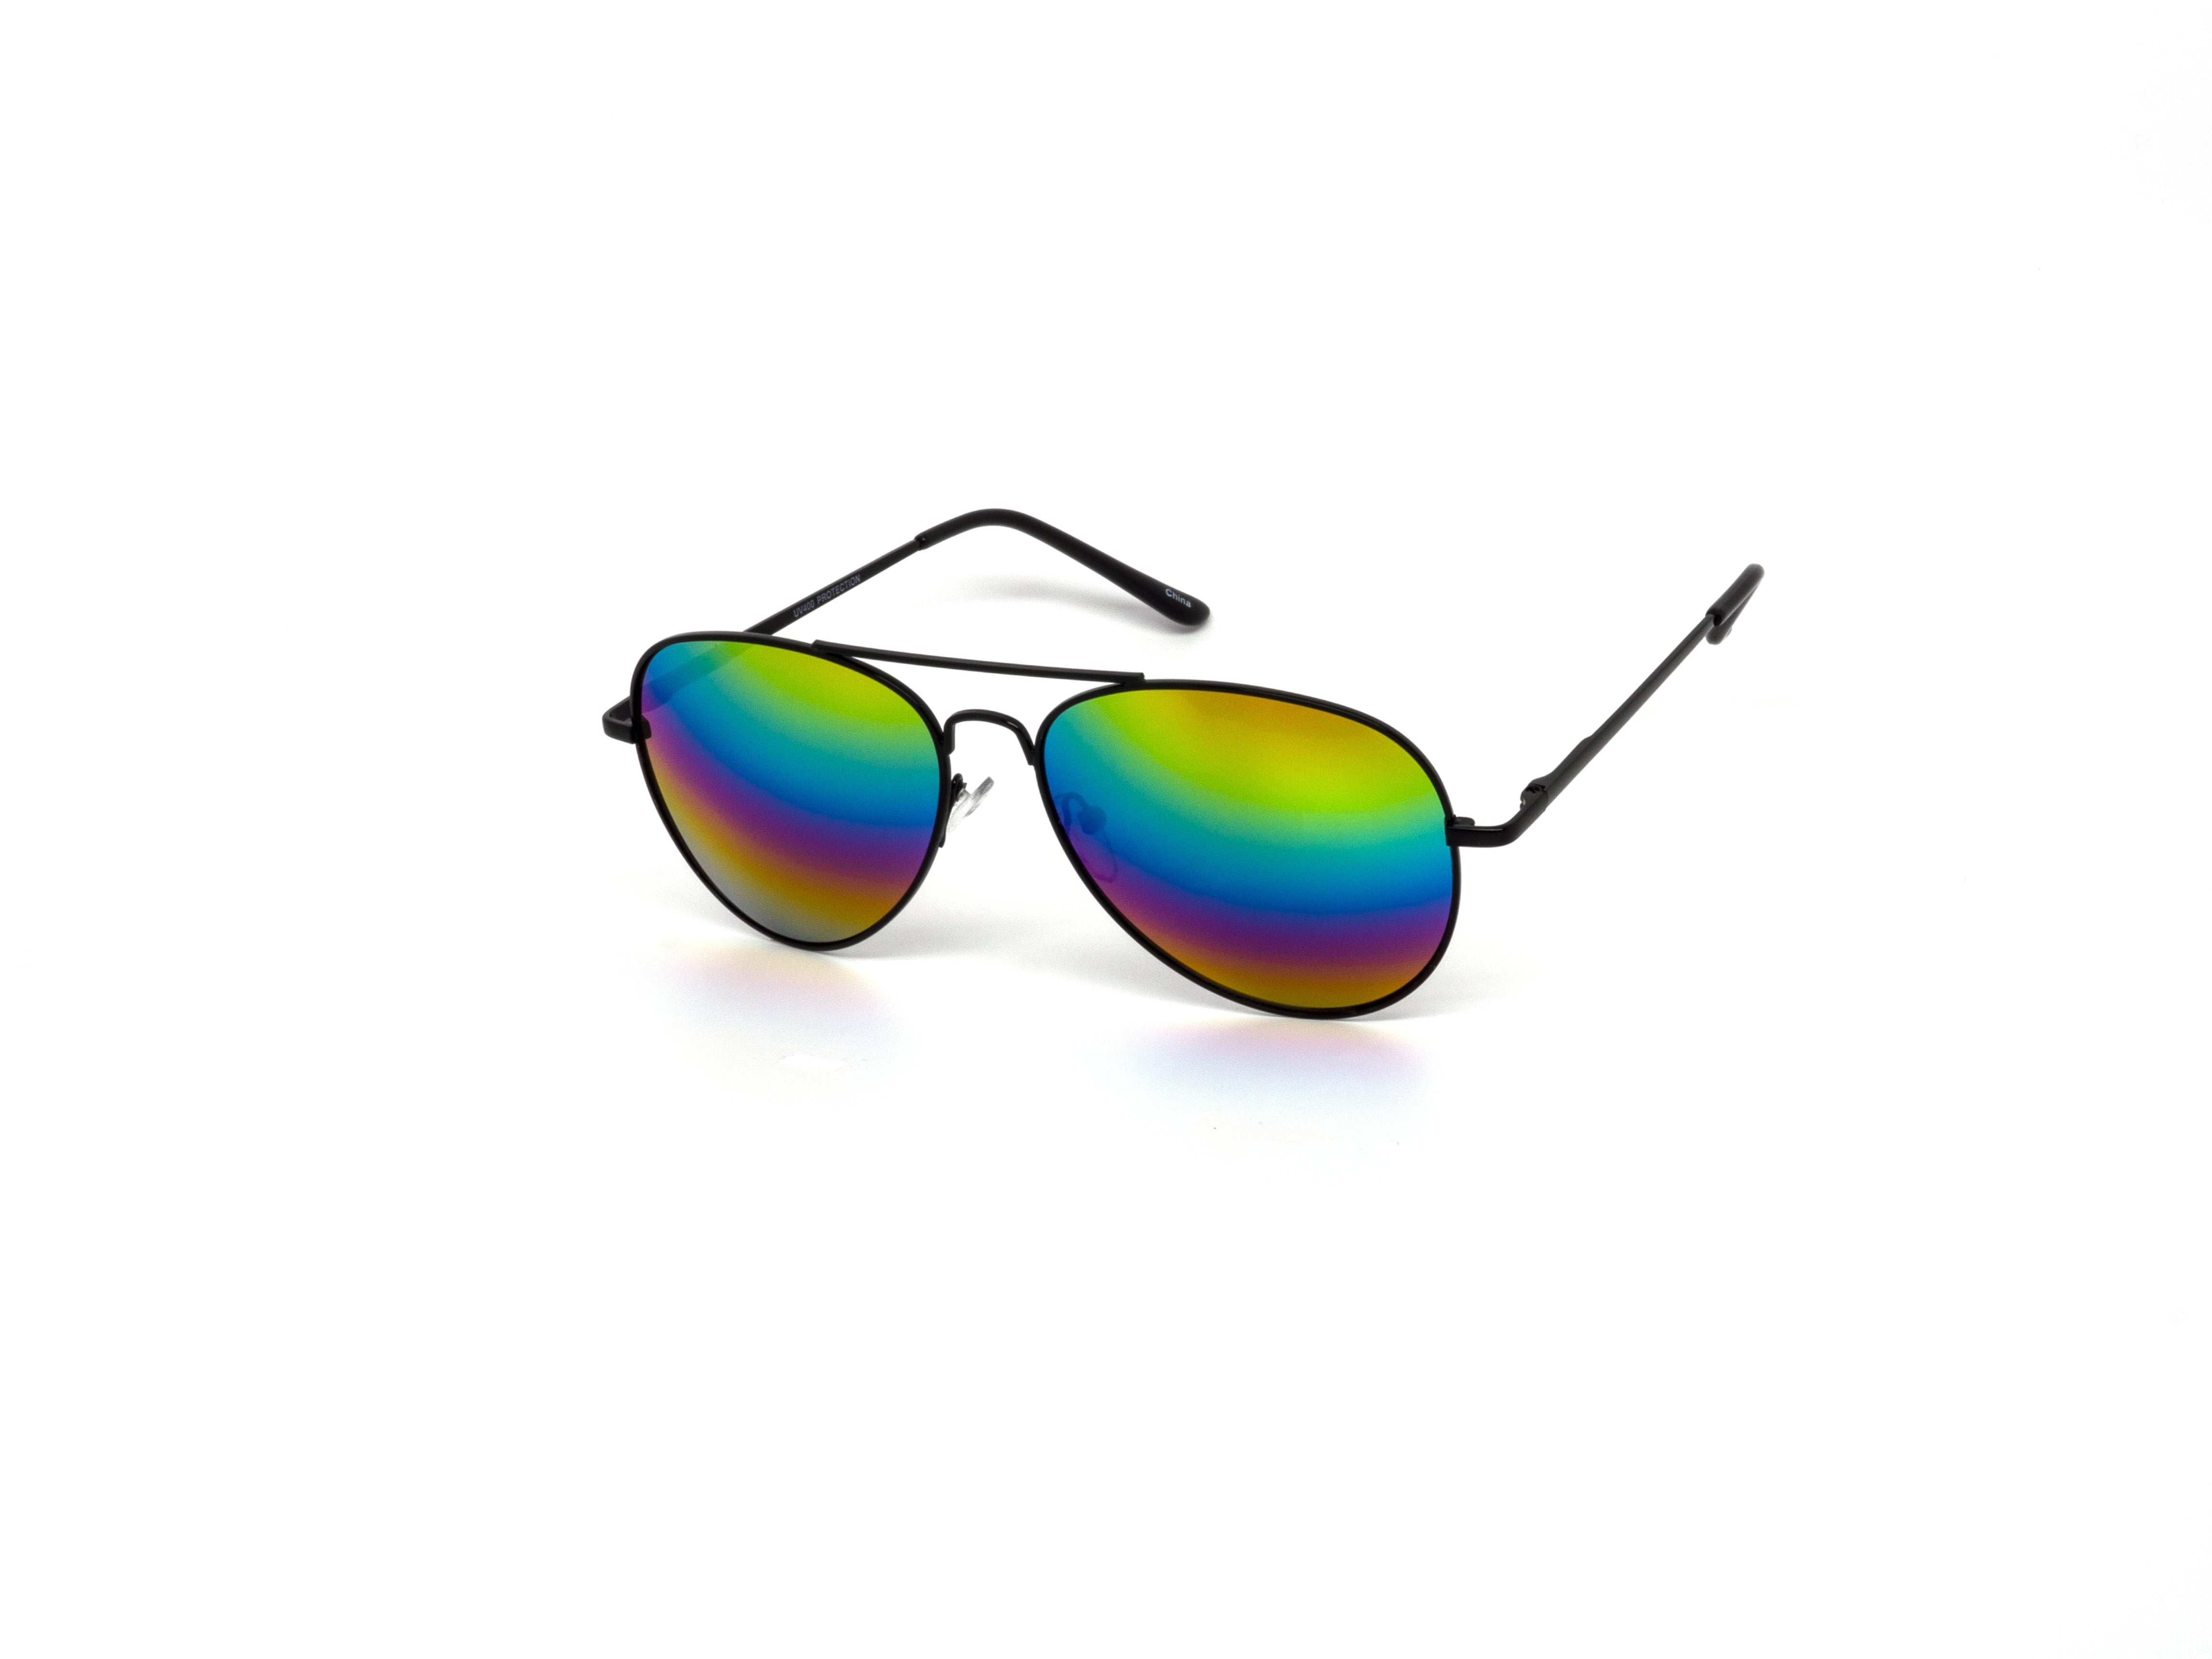 Buy grinderPUNCH Round Lennon Style Rainbow Sunglasses at Amazon.in